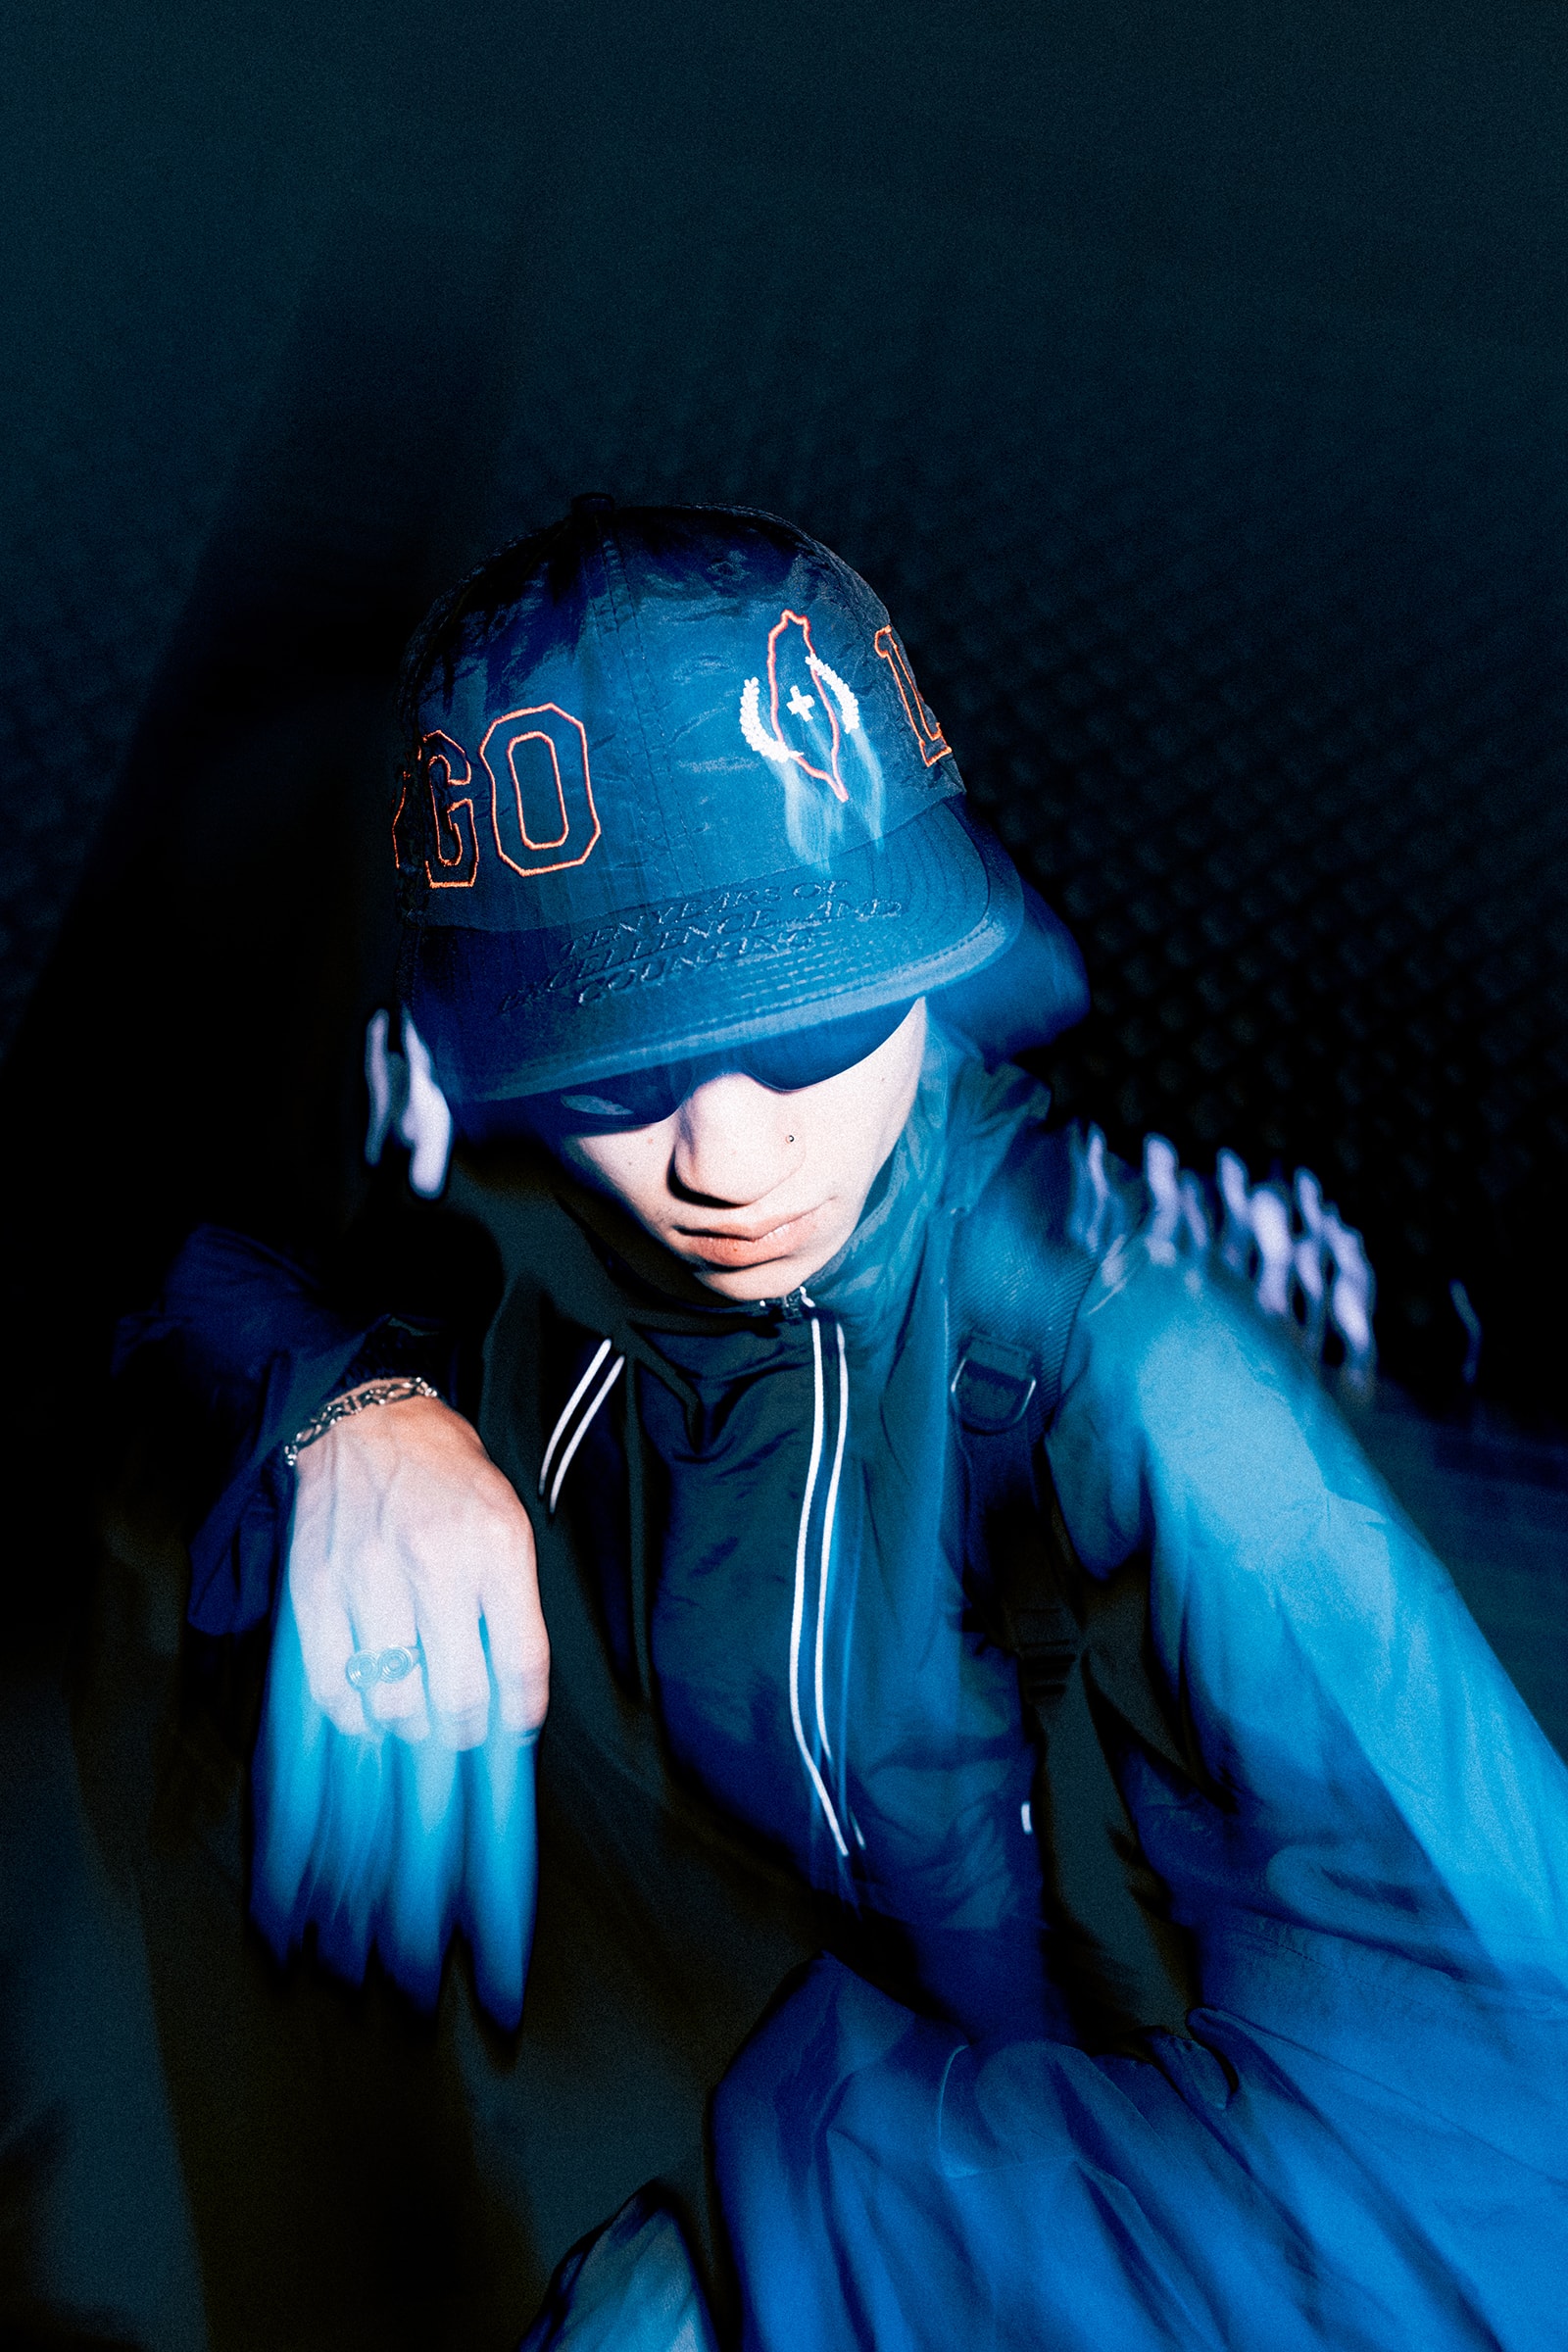 LAB Taipei 攜手紐約新銳獨立品牌 EasyGo 打造十週年限定帽款